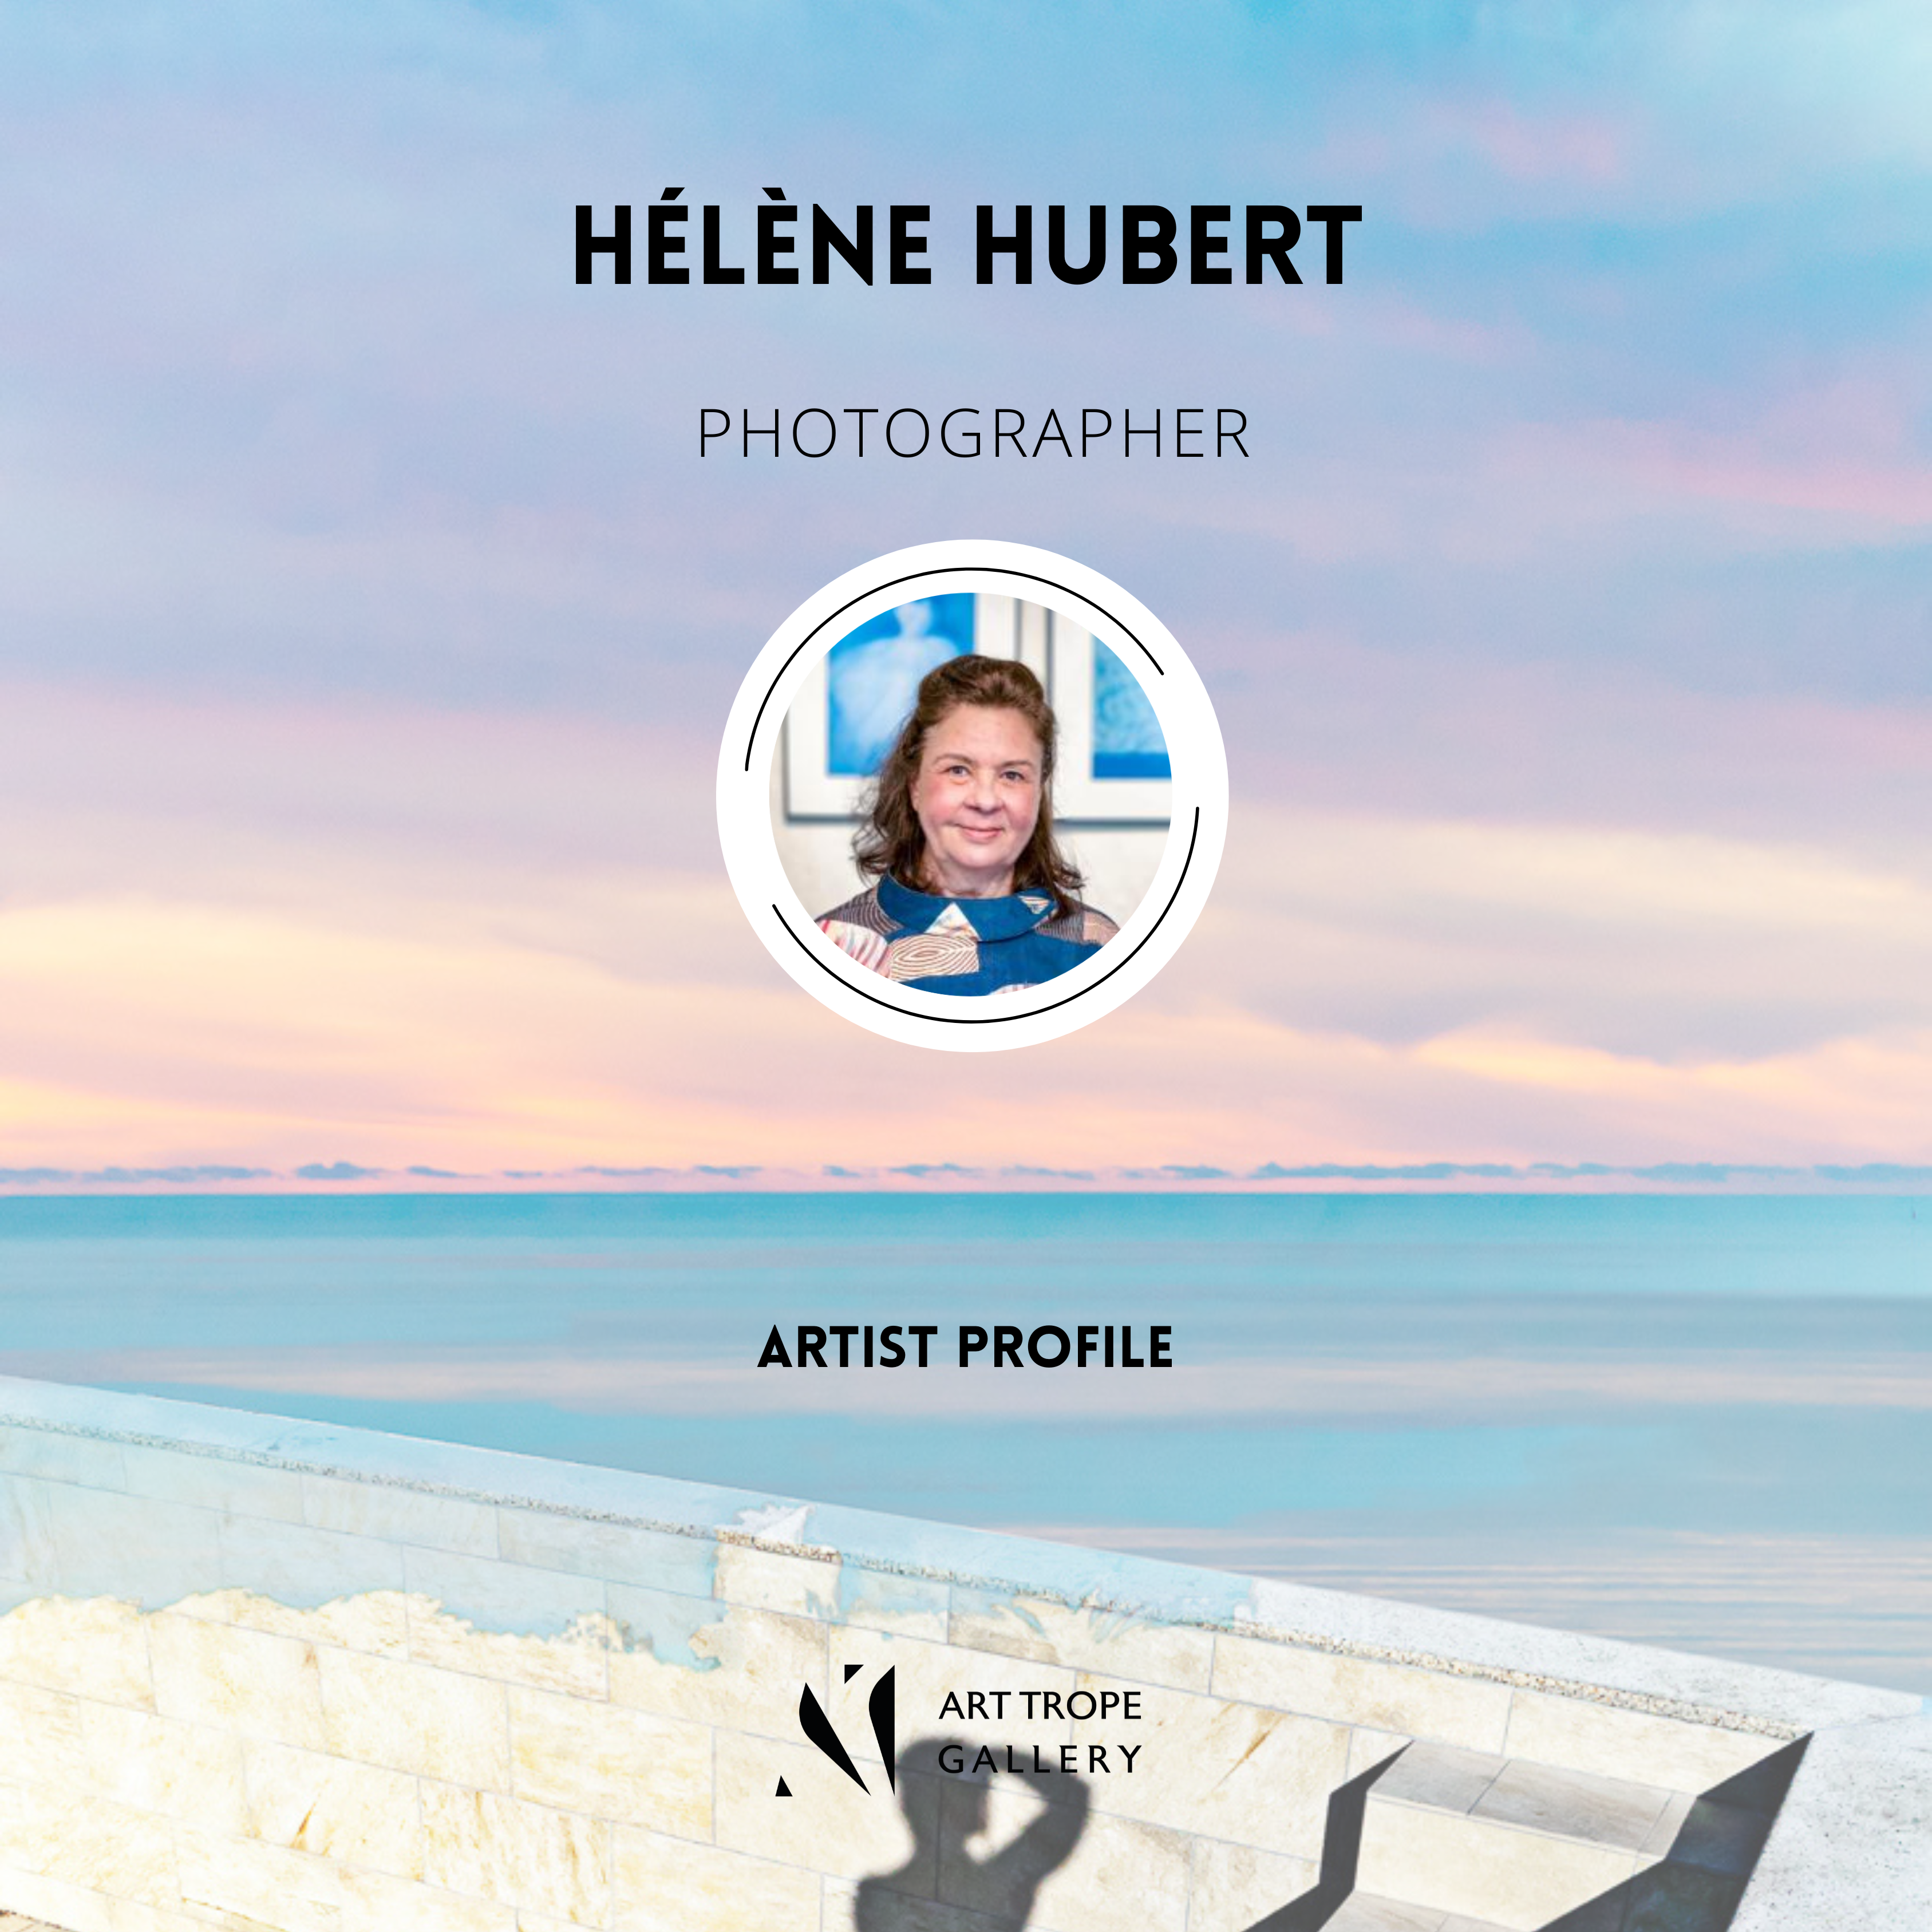 Art Trope Gallery features Photographer Hélène Hubert in a dedicated article!